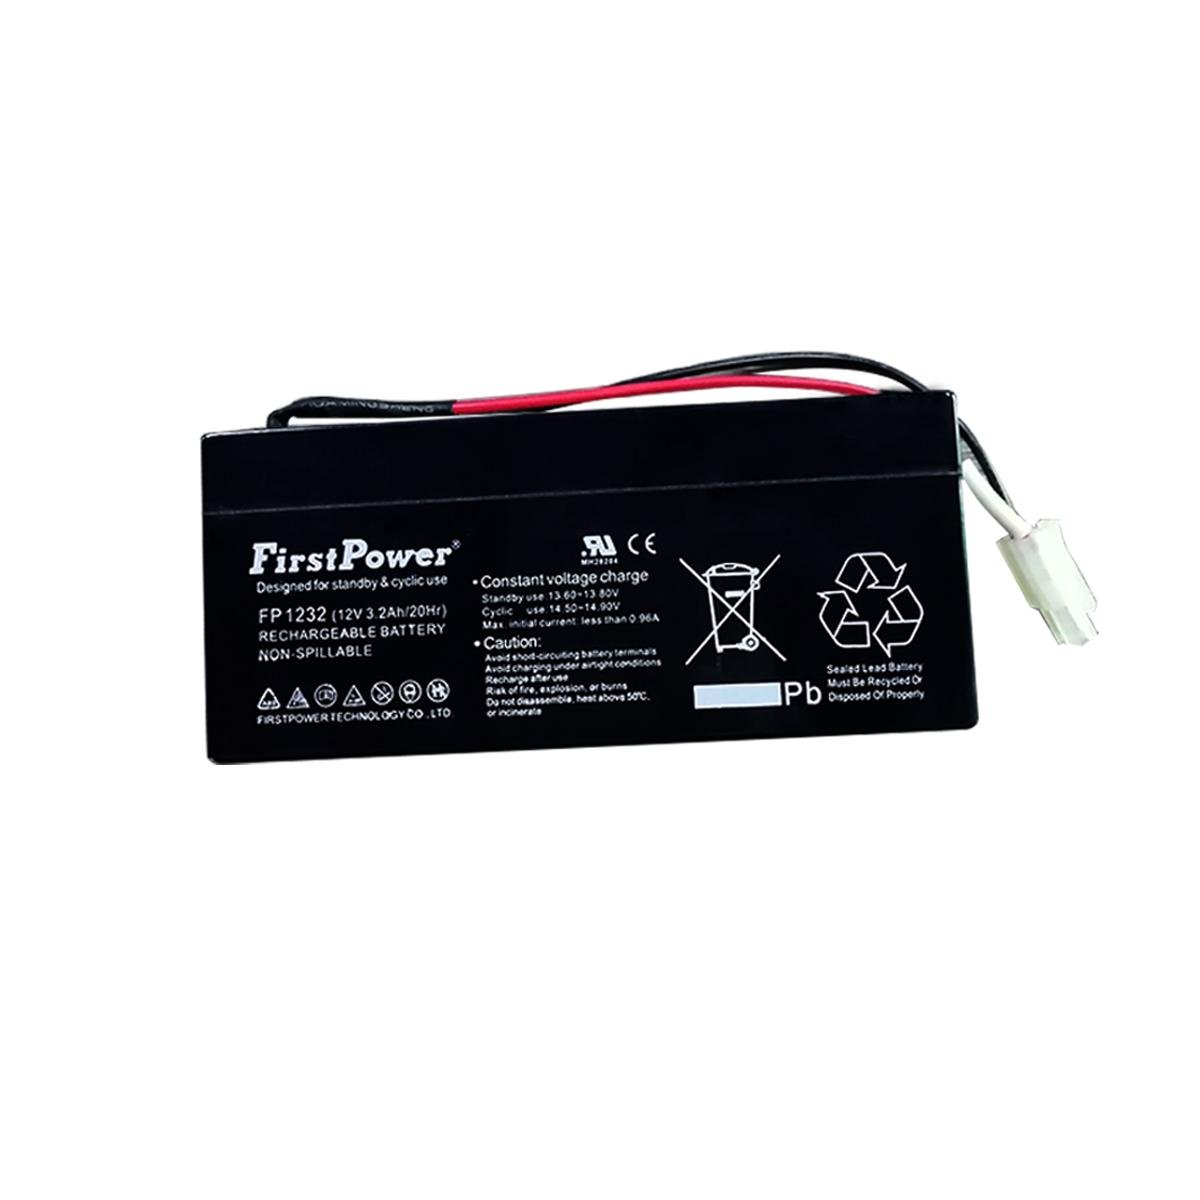 Biolight Original FirstPower FP1232 lead-acid cell batteries